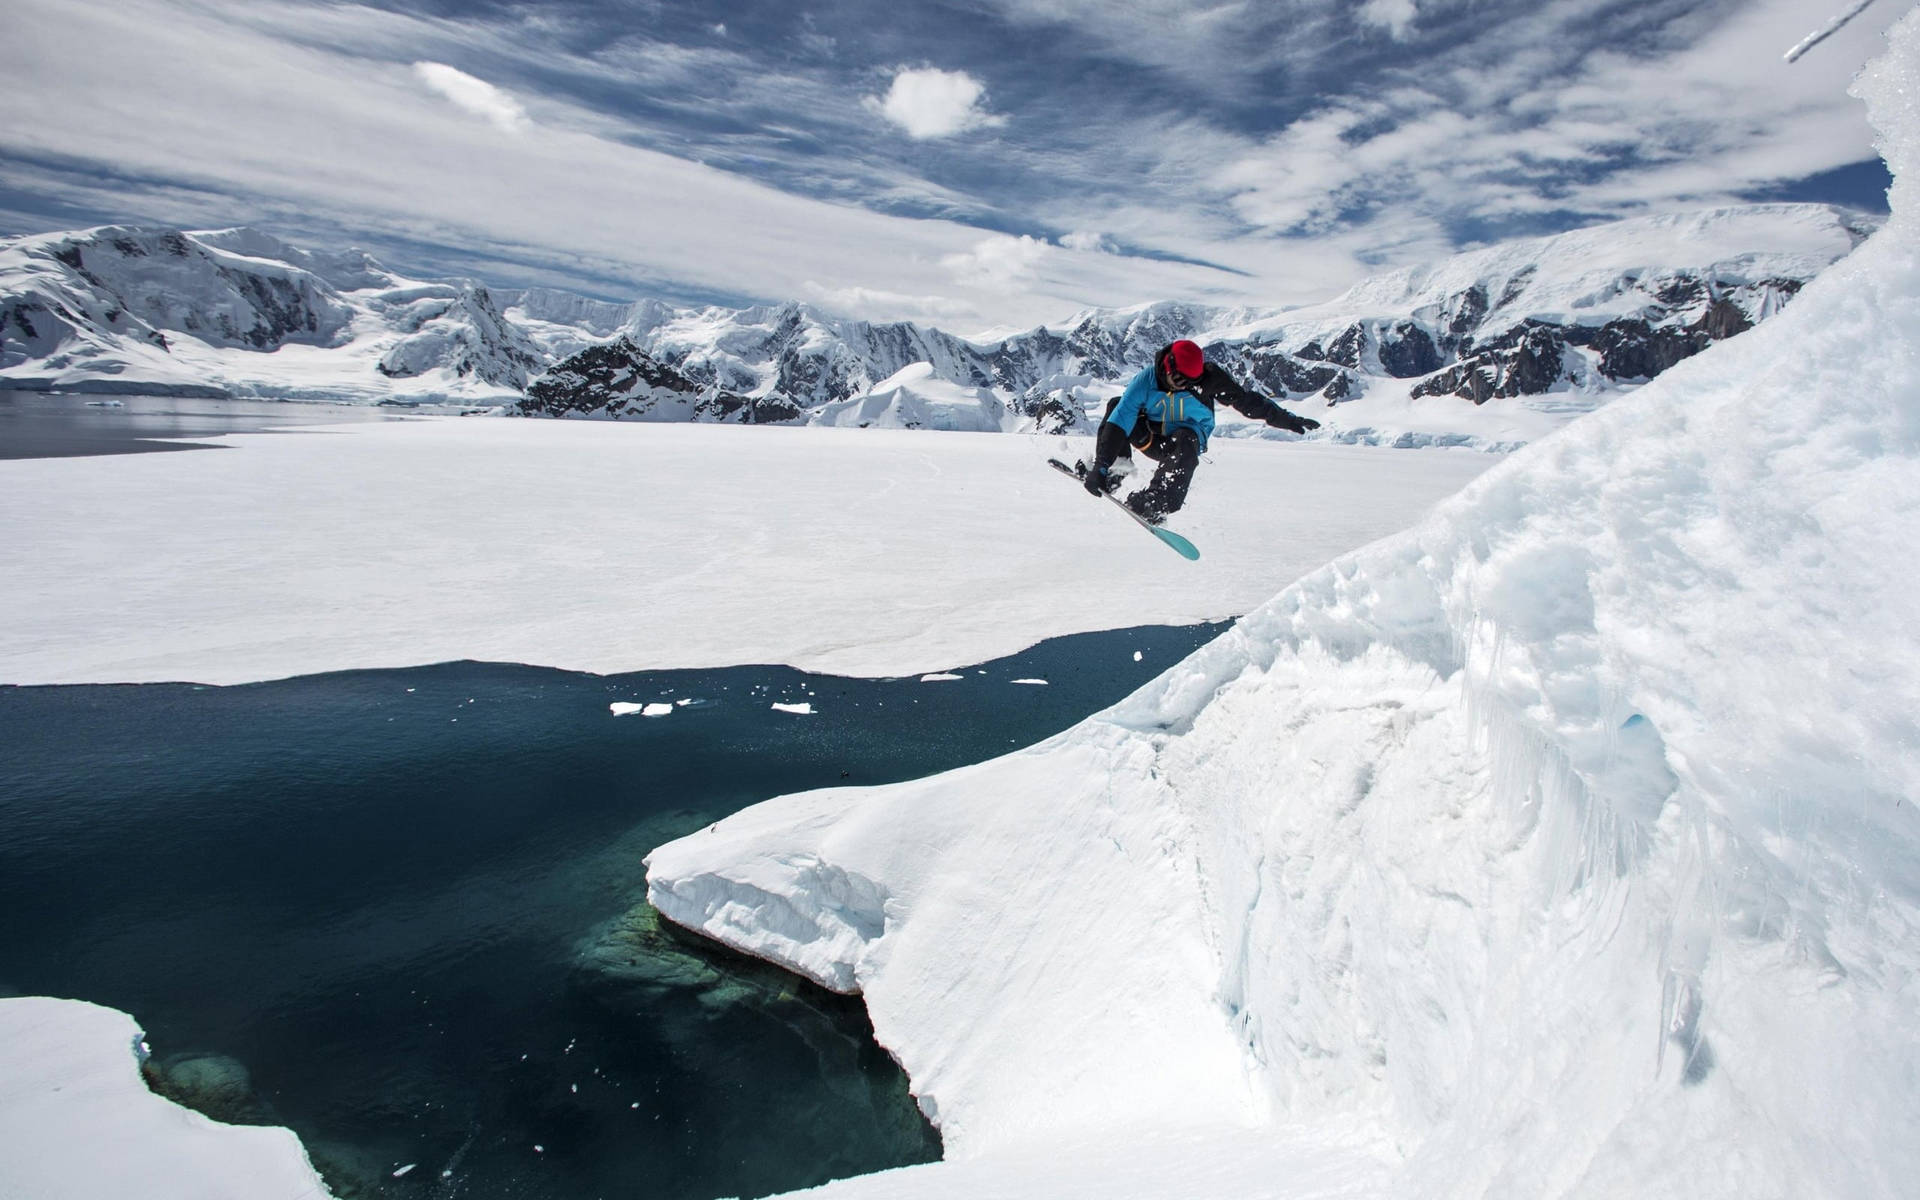 Snowboarding Across Water Background